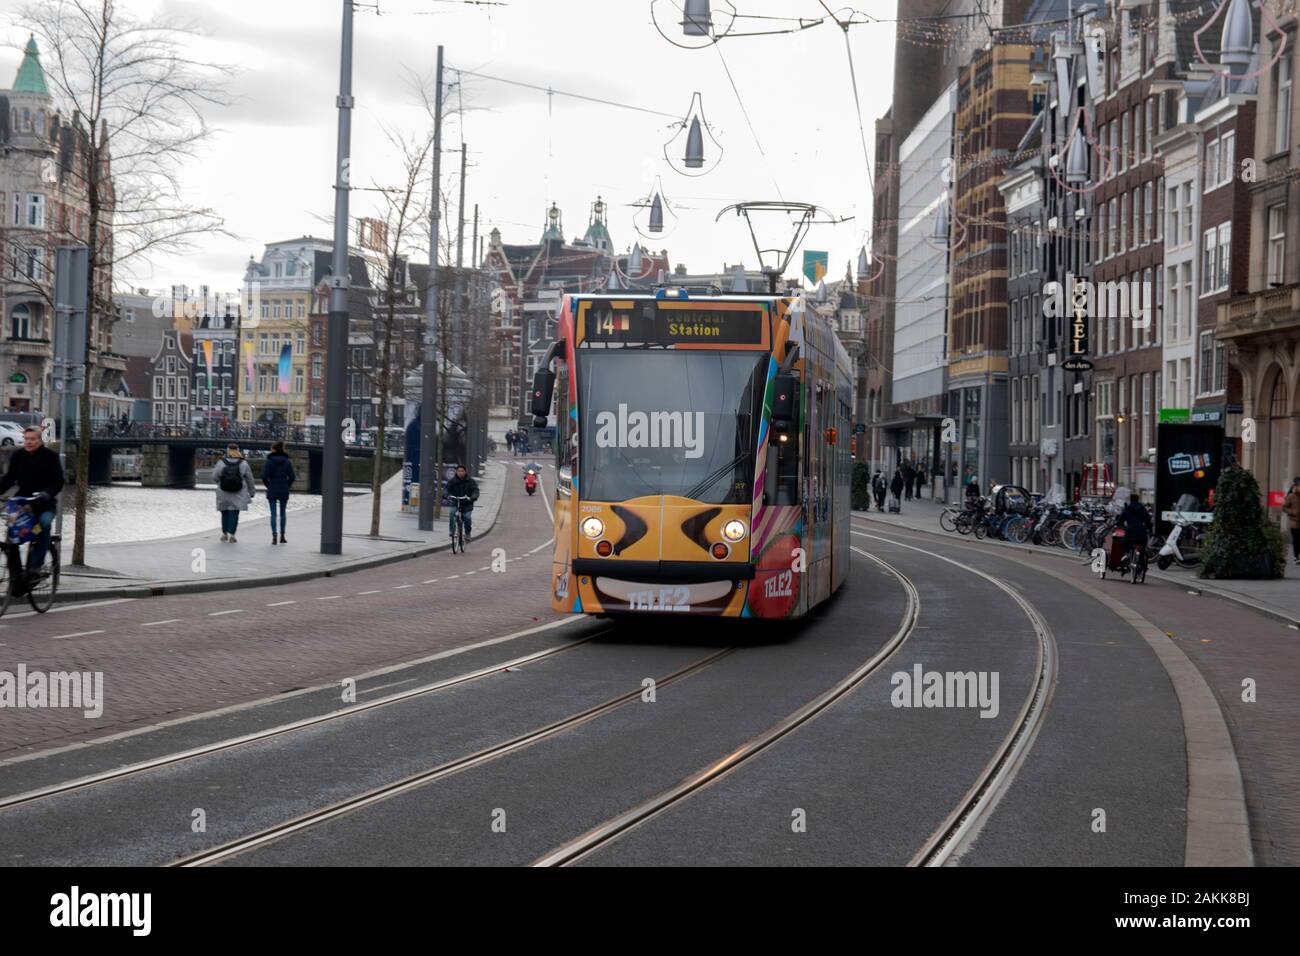 Tram 14 Theme Tram Tele2 At Amsterdam The Netherlands 2020 Stock Photo -  Alamy